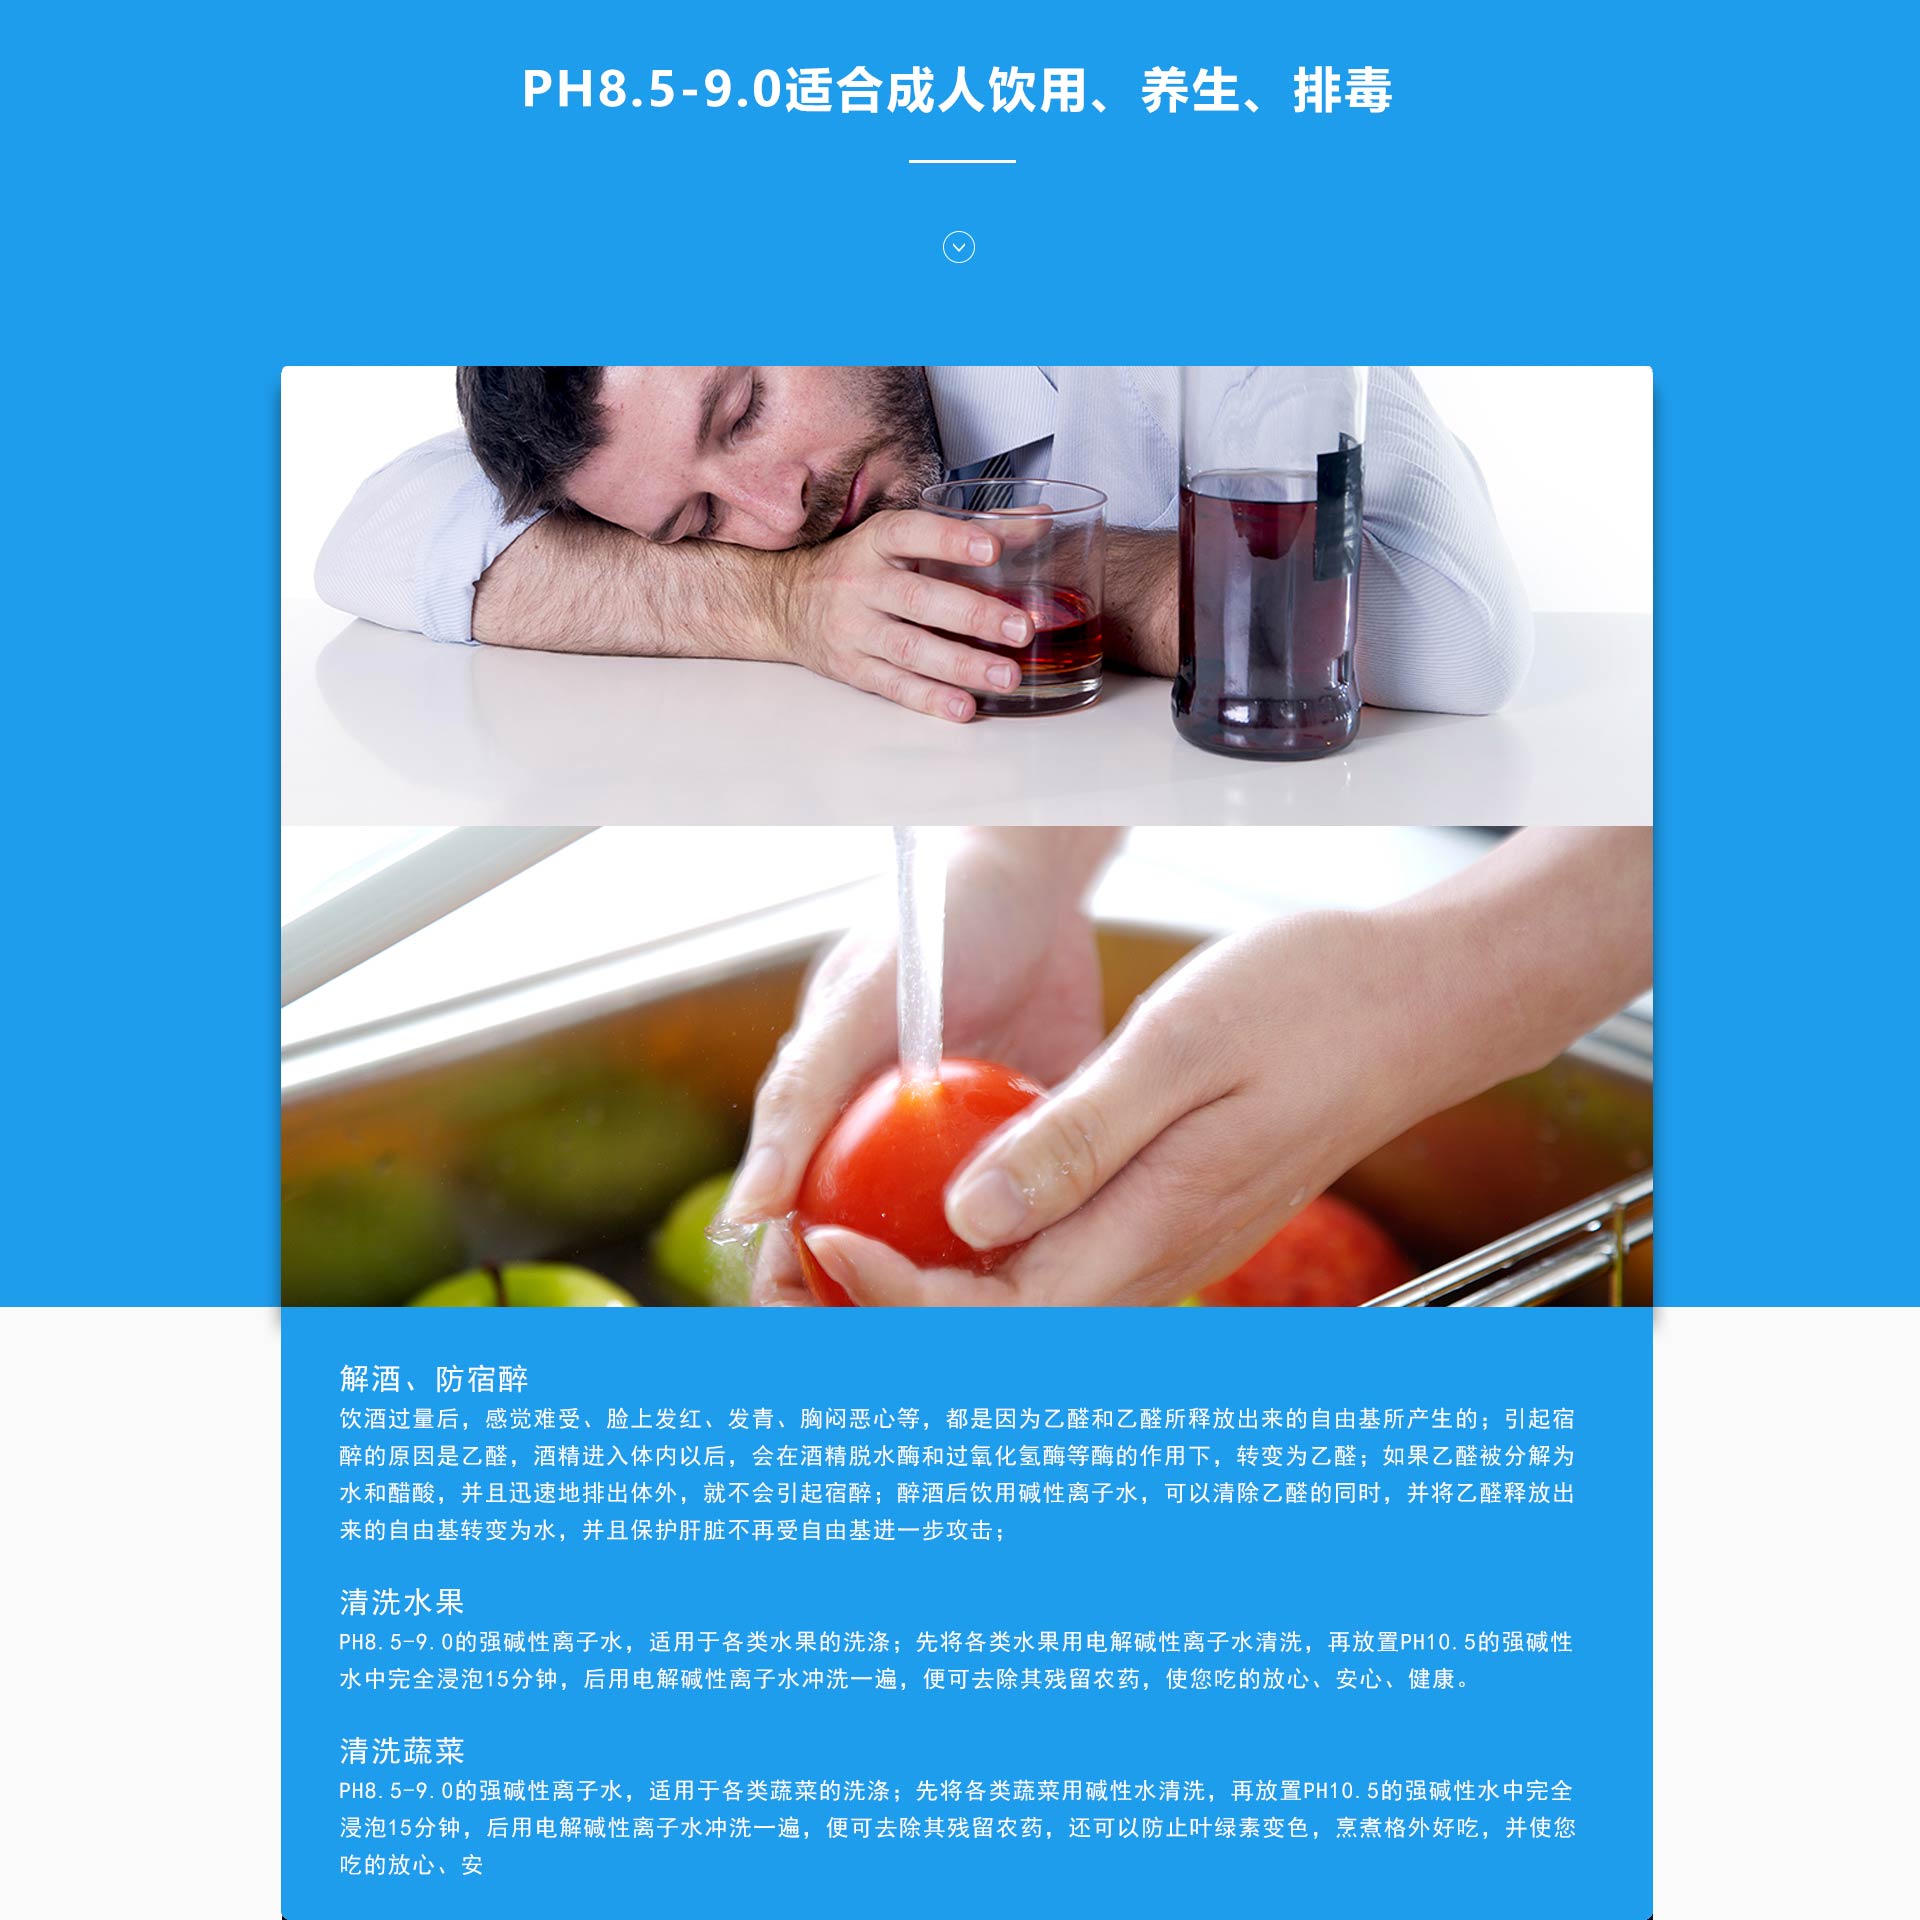 PH9.0-9.5解酒、防宿醉